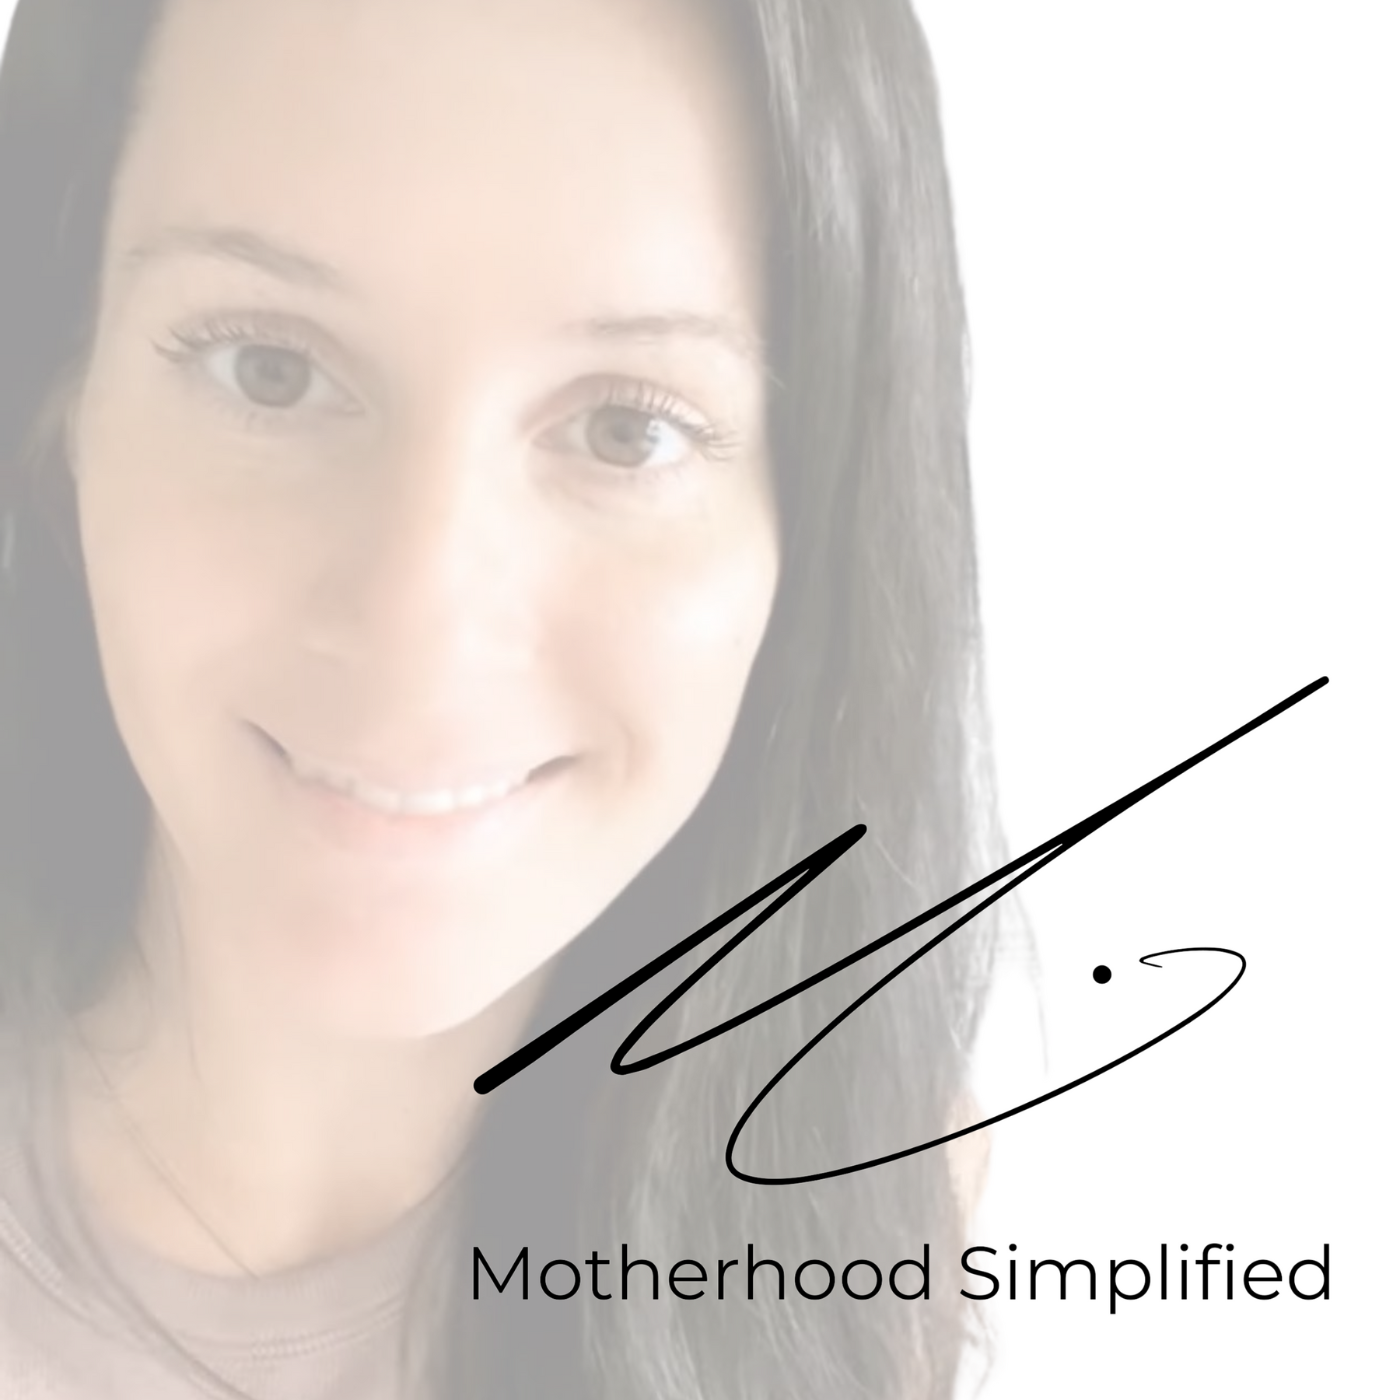 Motherhood Simplified